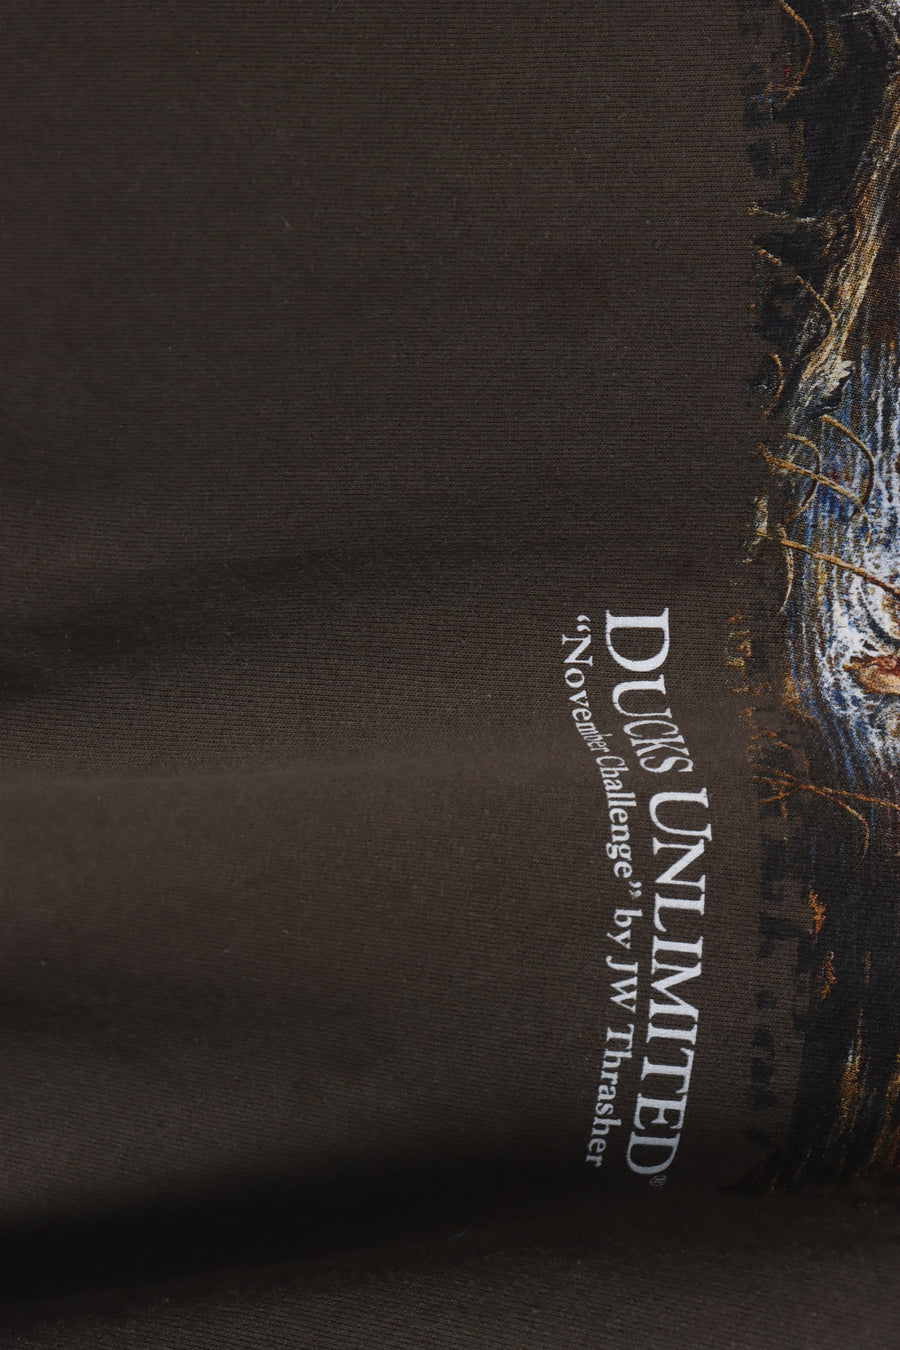 Ducks Unlimited 'November Challenge' Hunting Deers & Ducks Sweatshirt (XL)